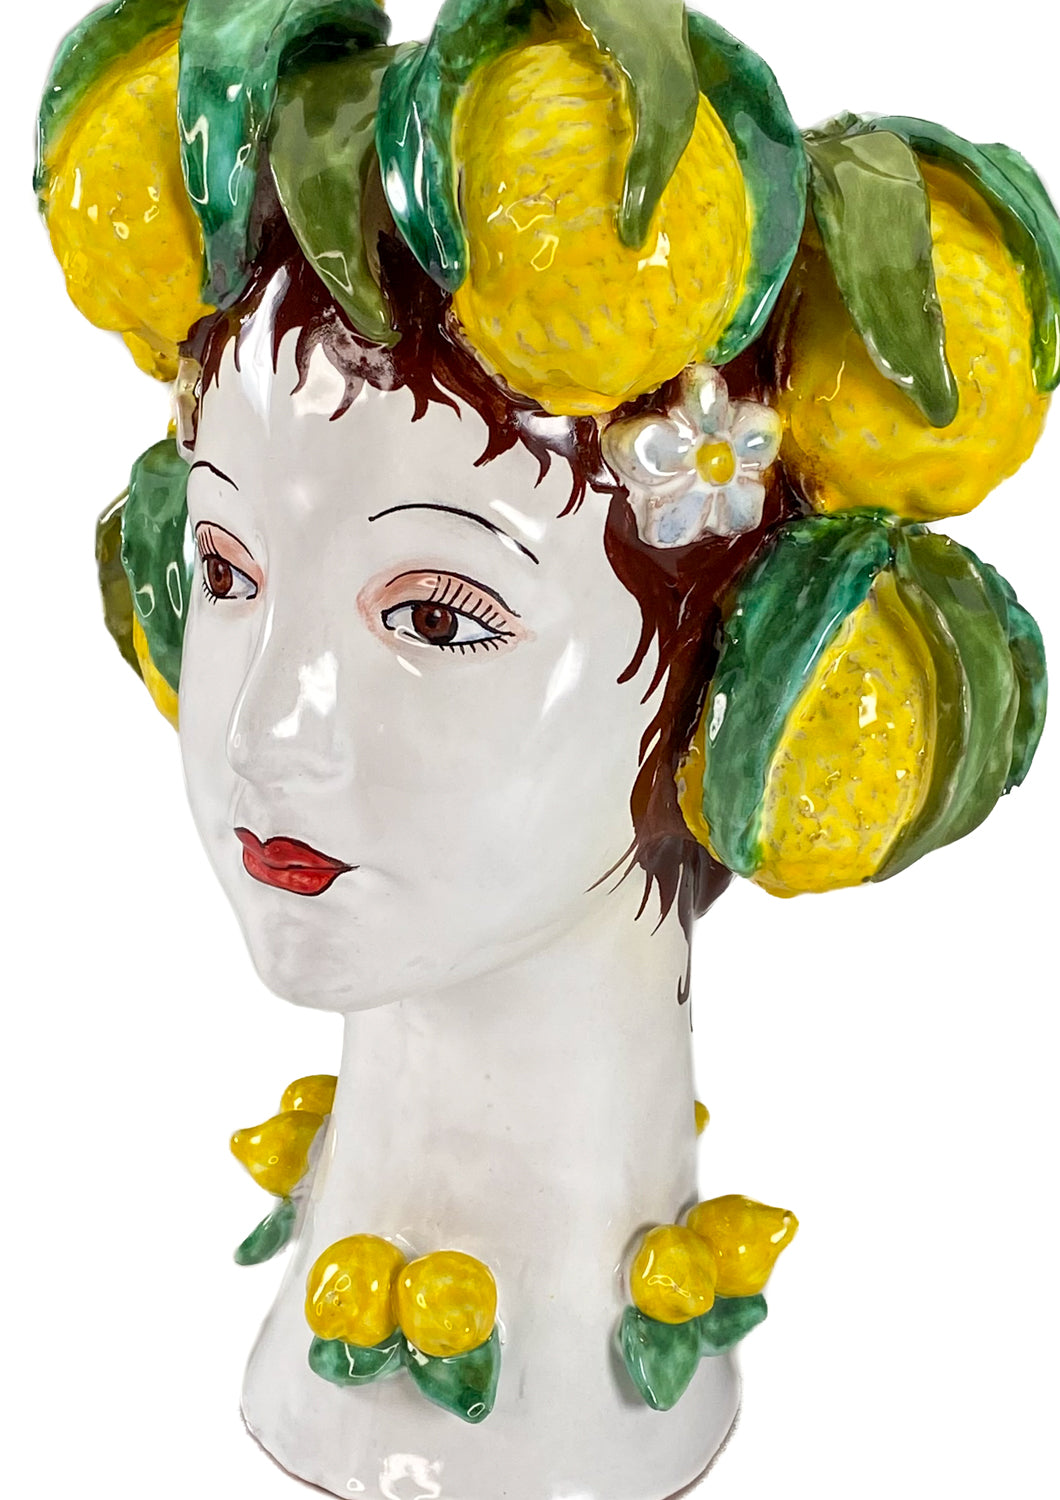 Virginia Casa "Donatello" Lady Figure - Lemons